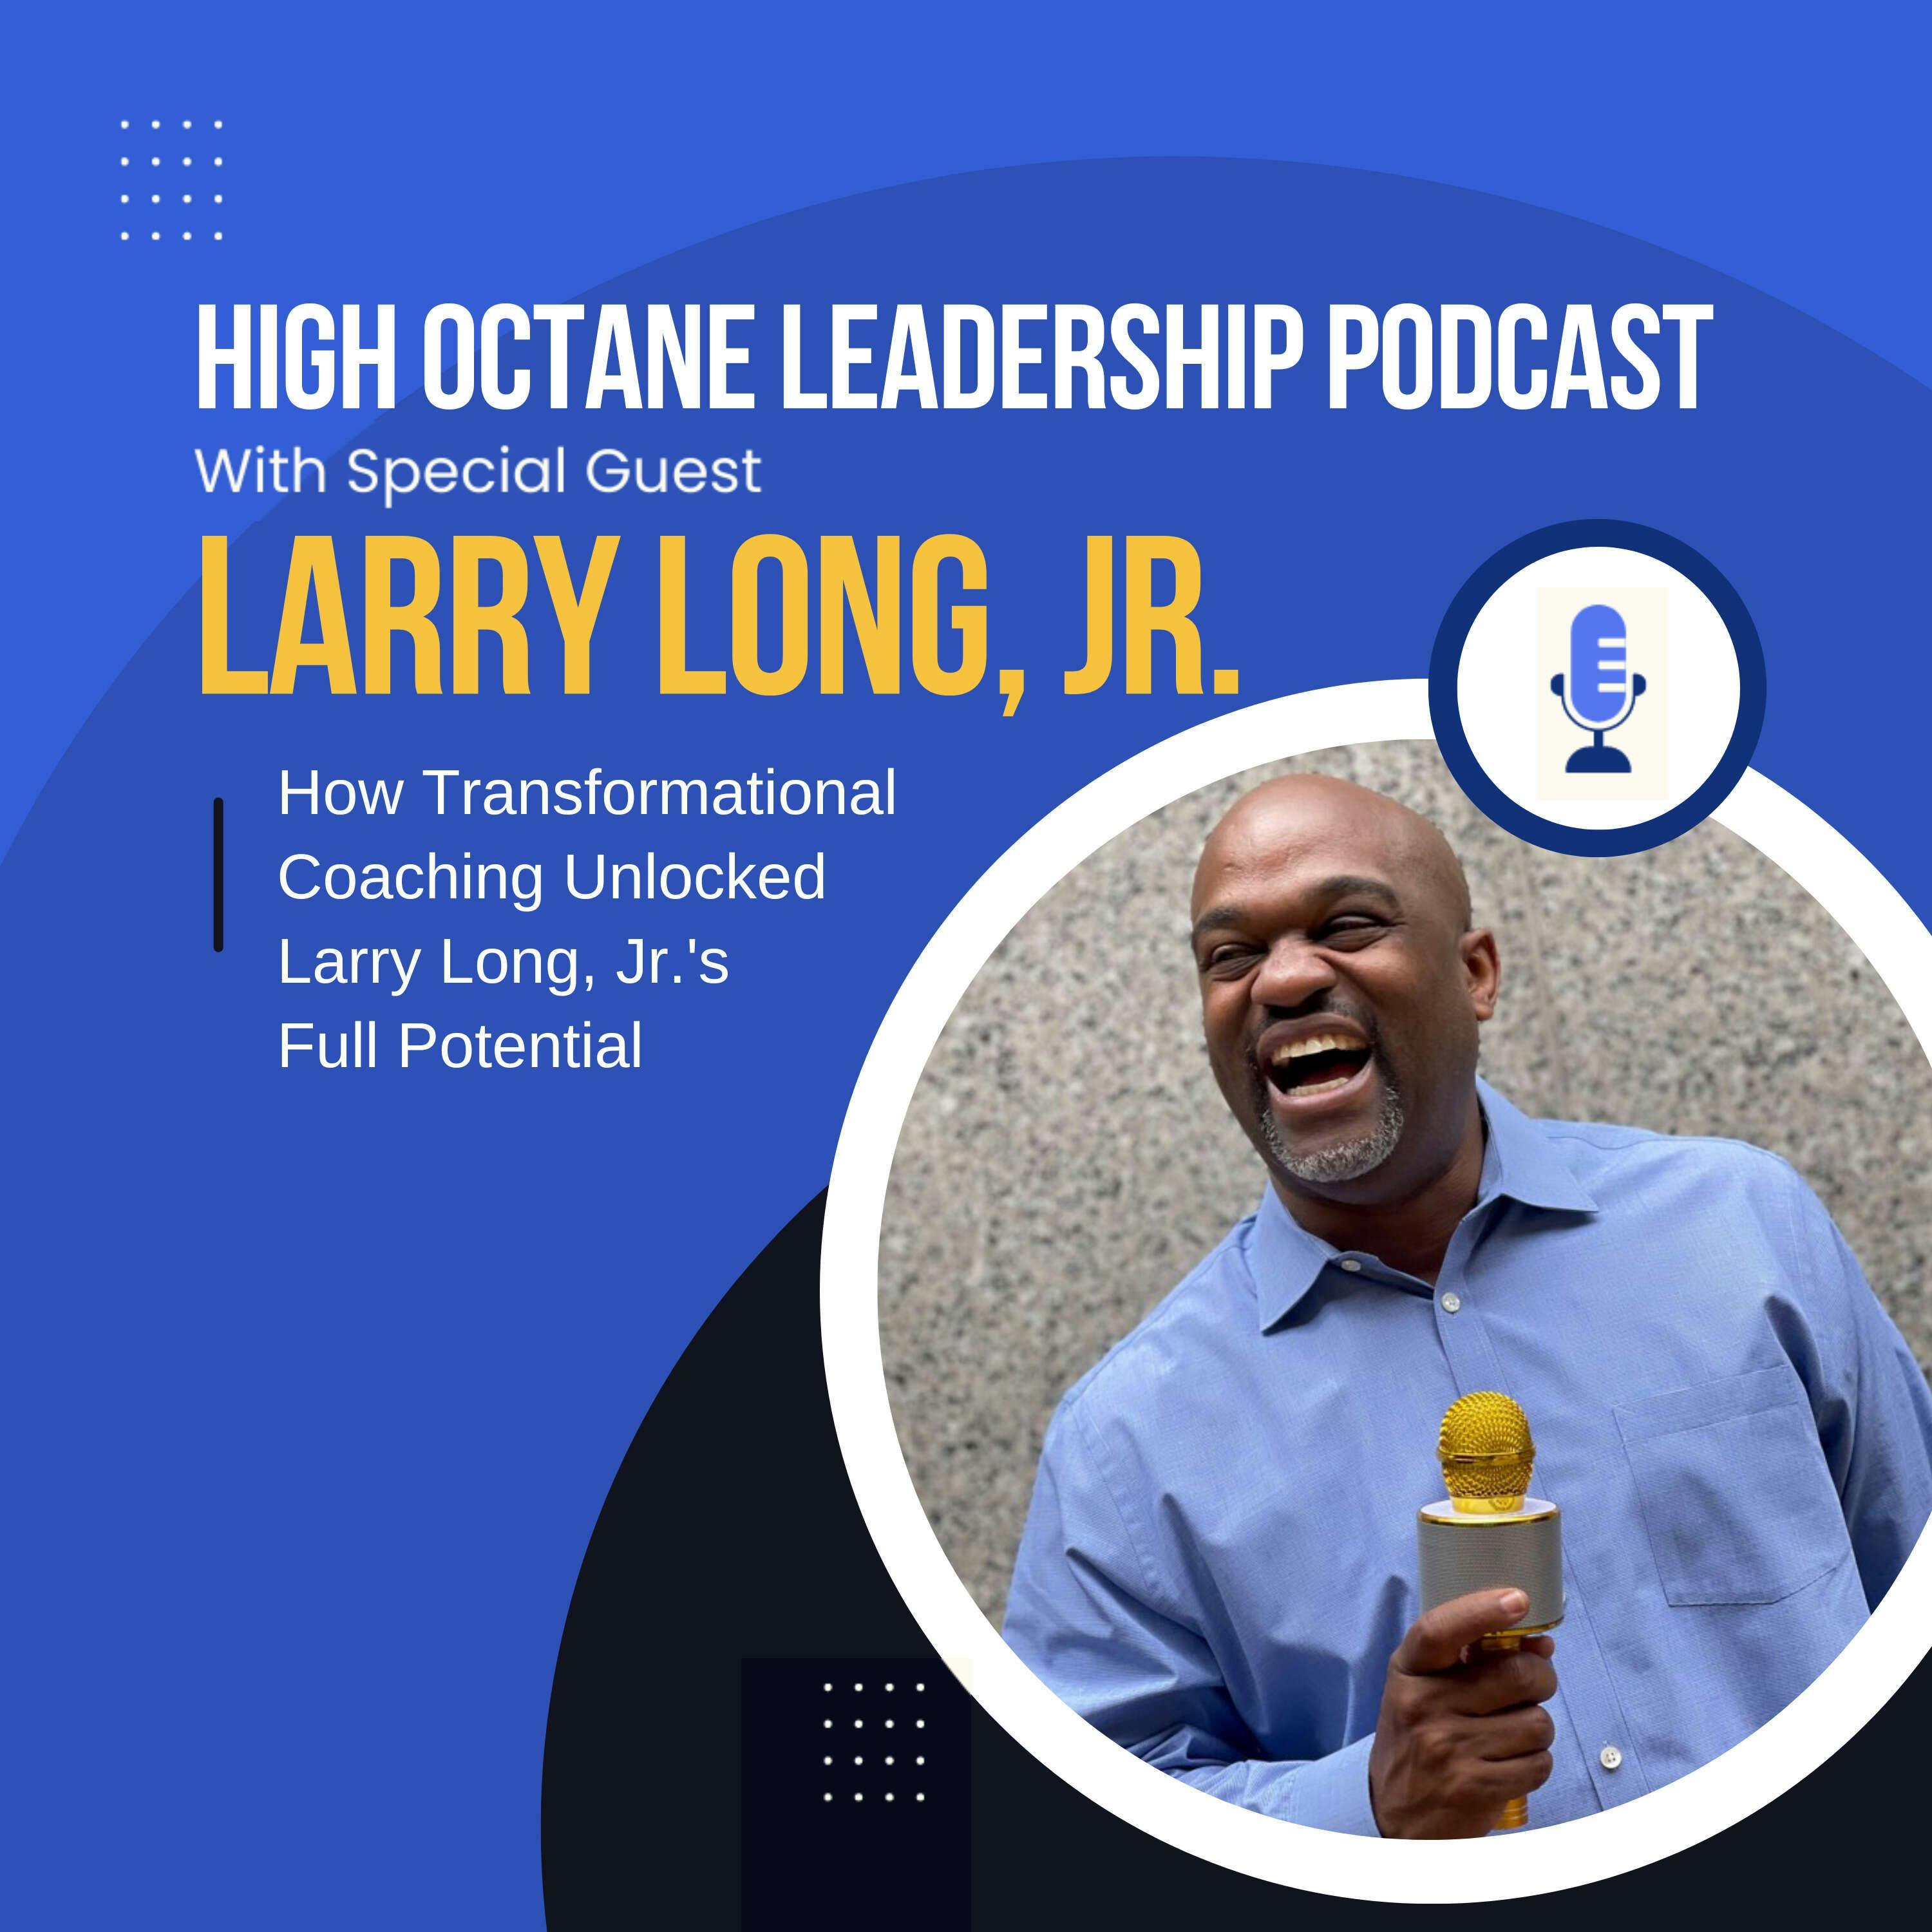 How Transformational Coaching Unlocked Larry Long Jr's Full Potential